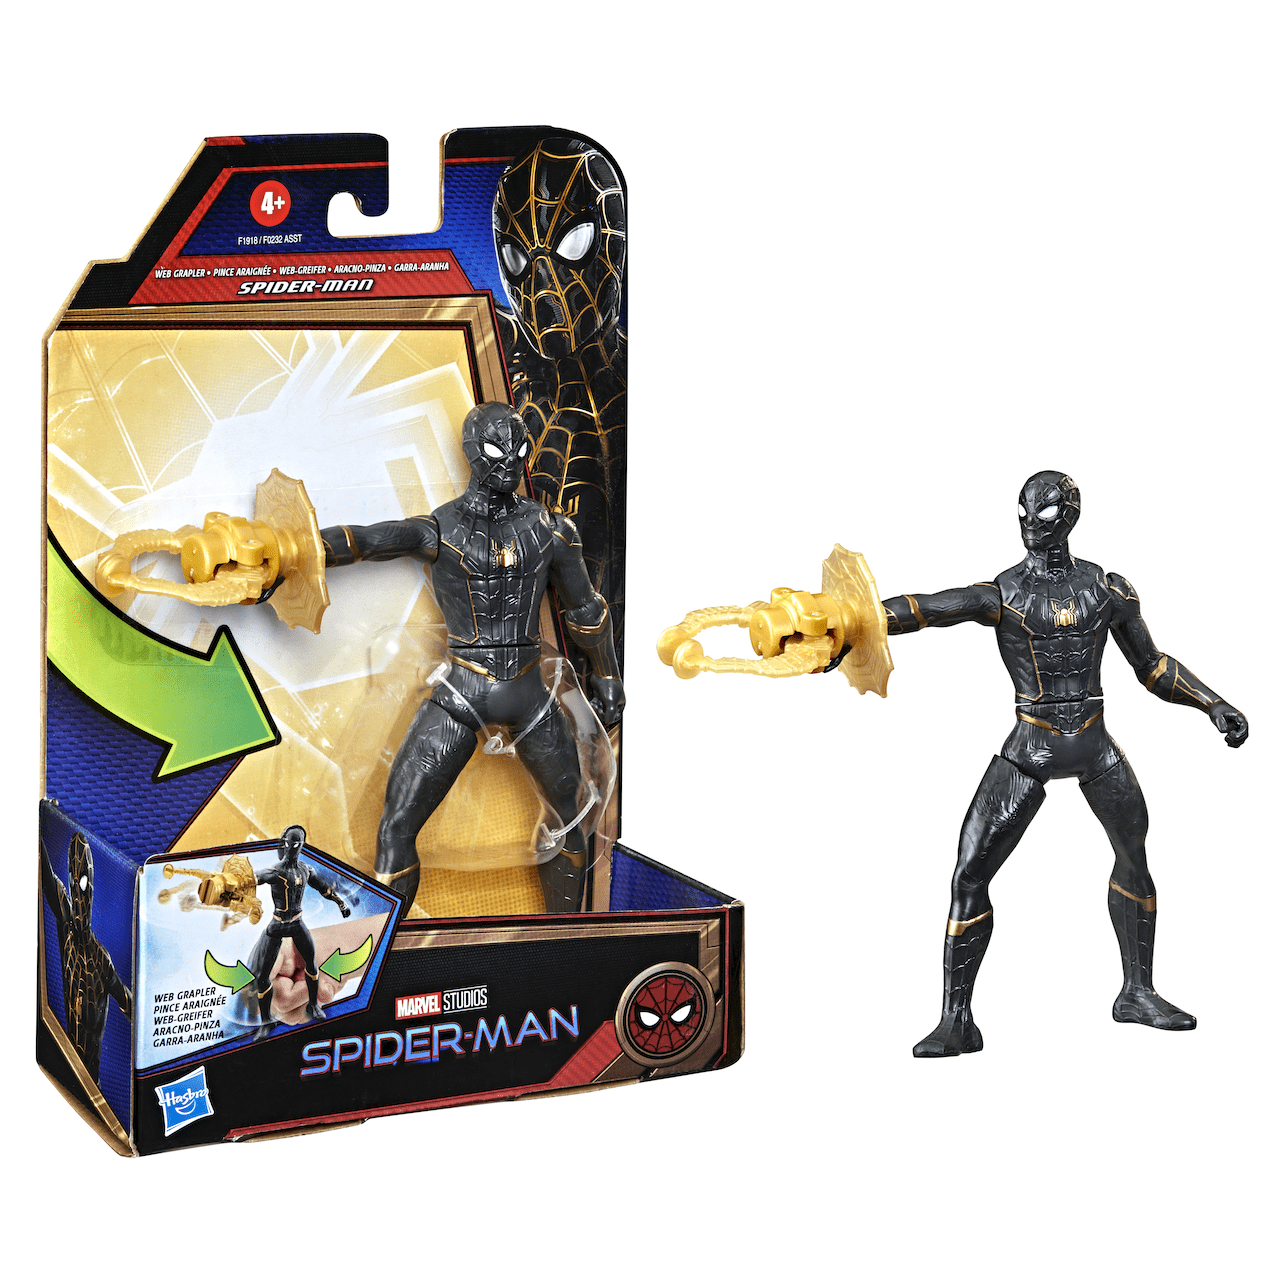 Spider-man Black Gold Suit Toy 2